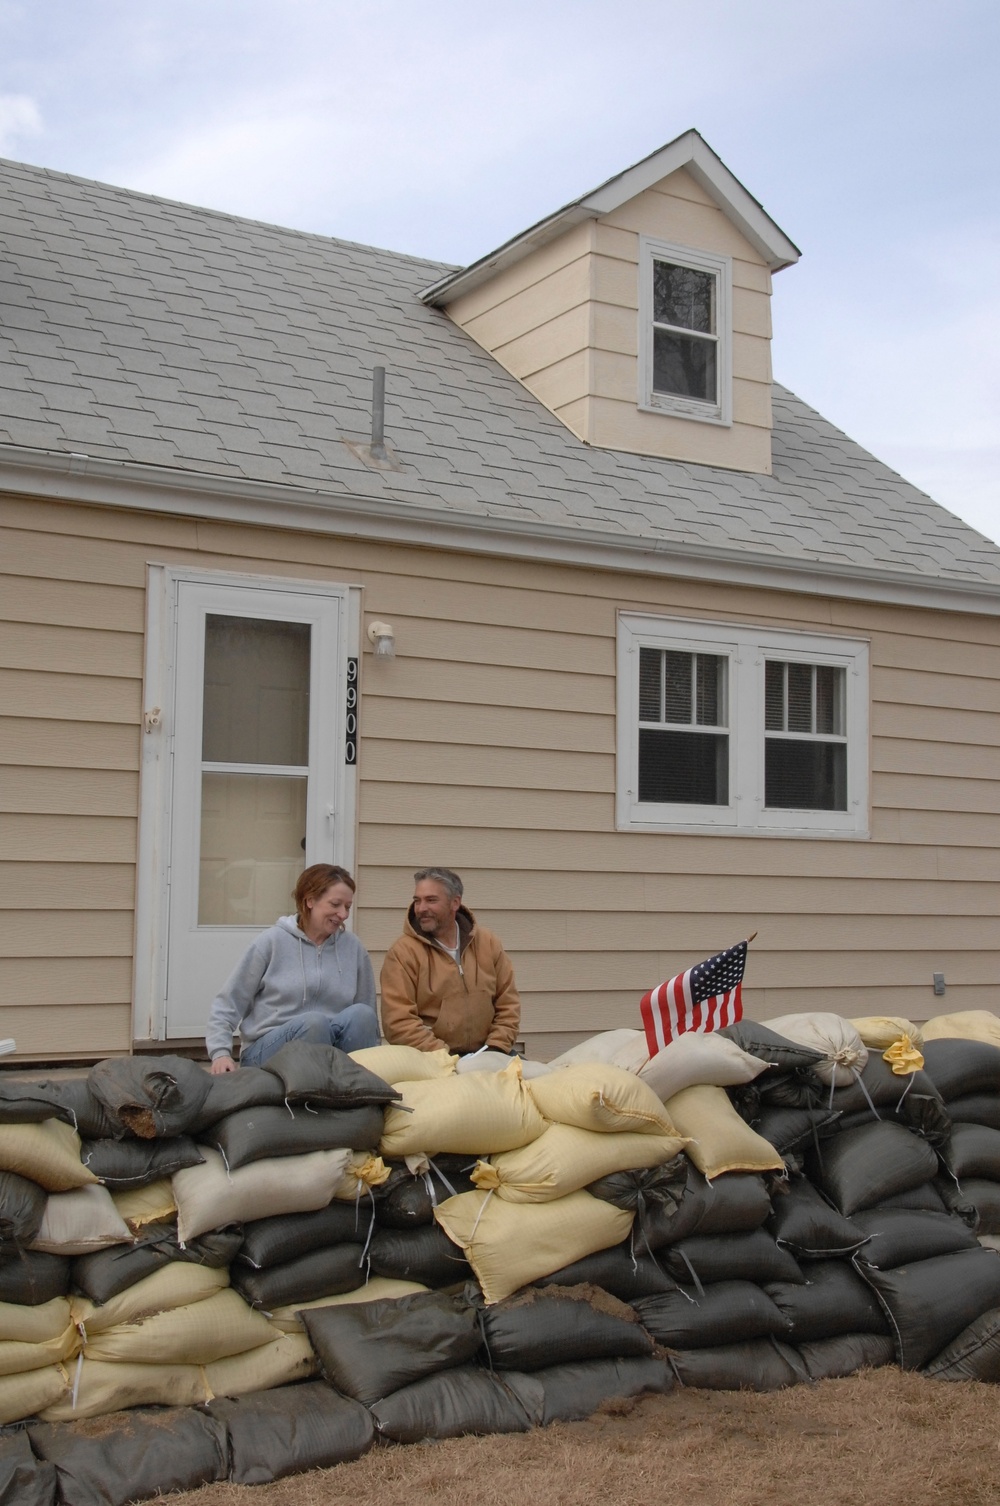 North Dakota National Guard Soldiers sandbag the Schmidt house